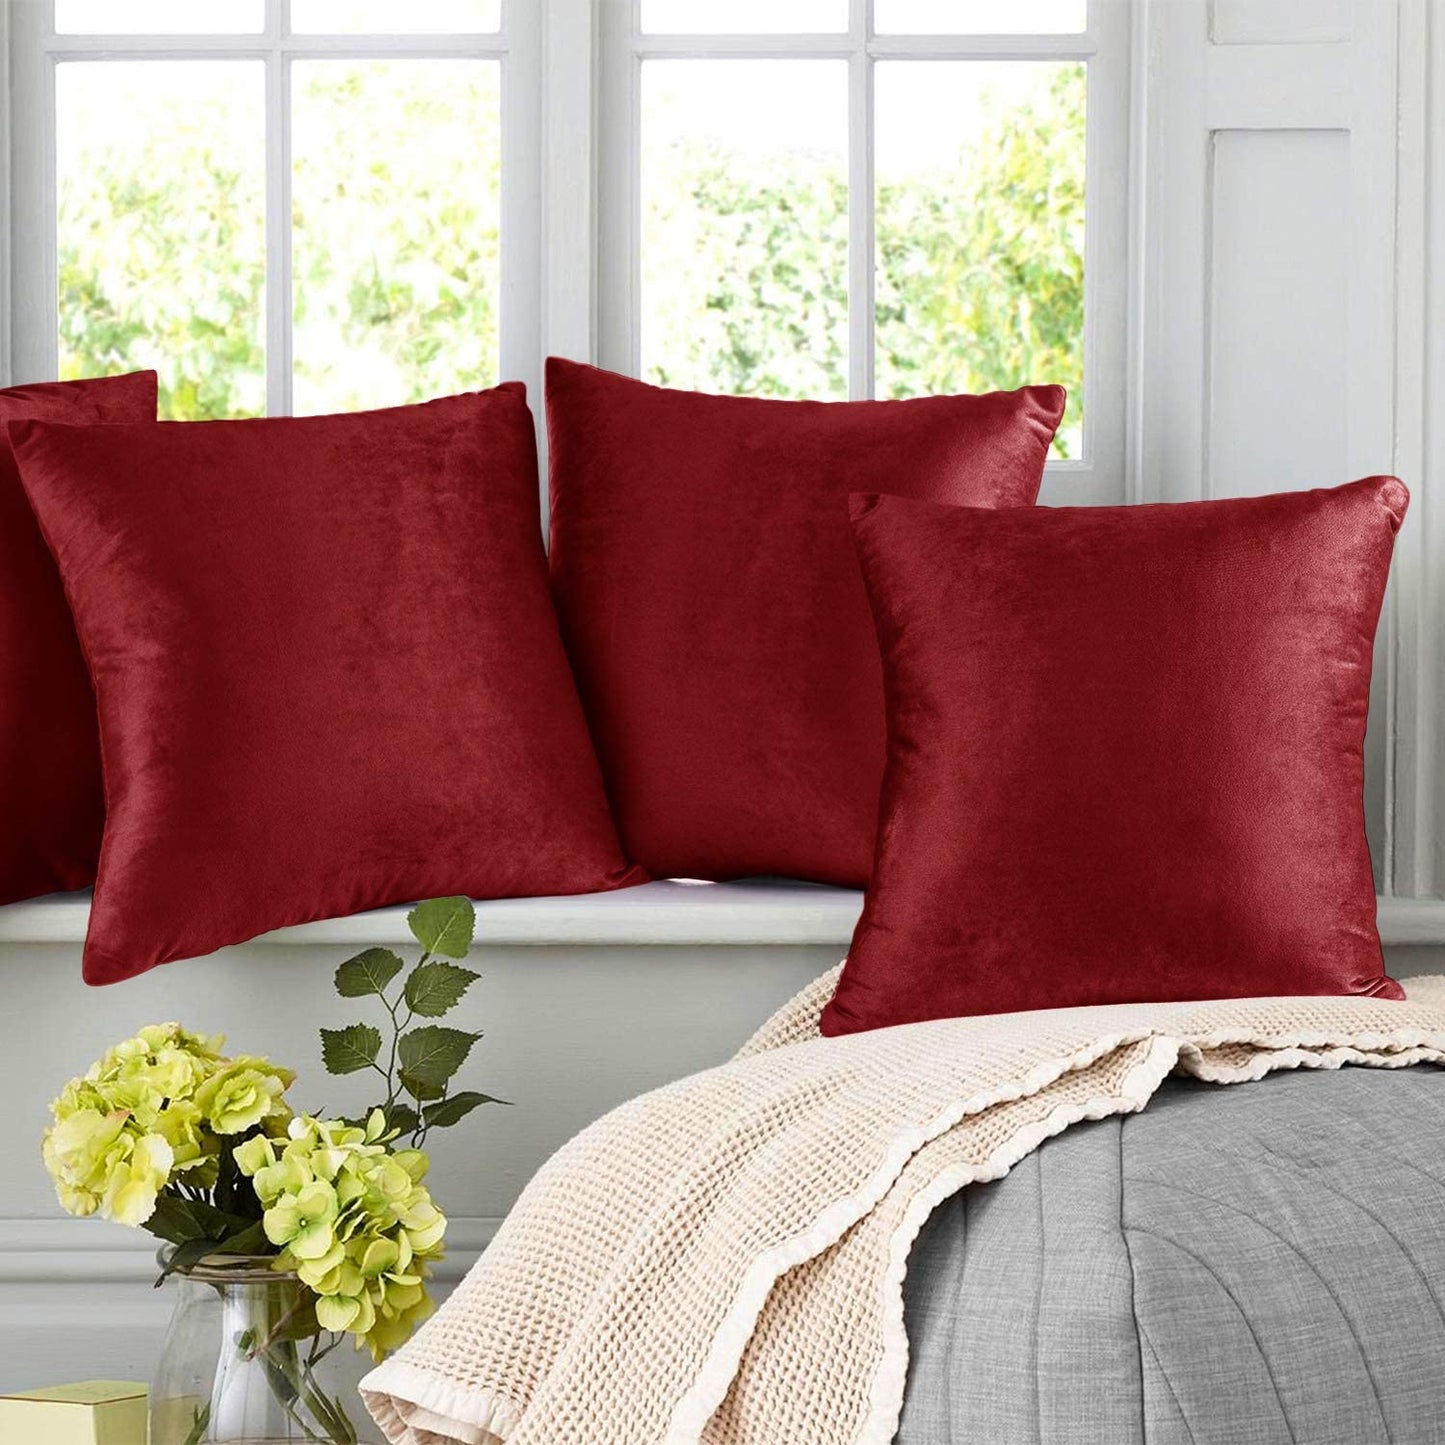 Plain Velvet Cushion 16 x 16 inches - Cherry Red